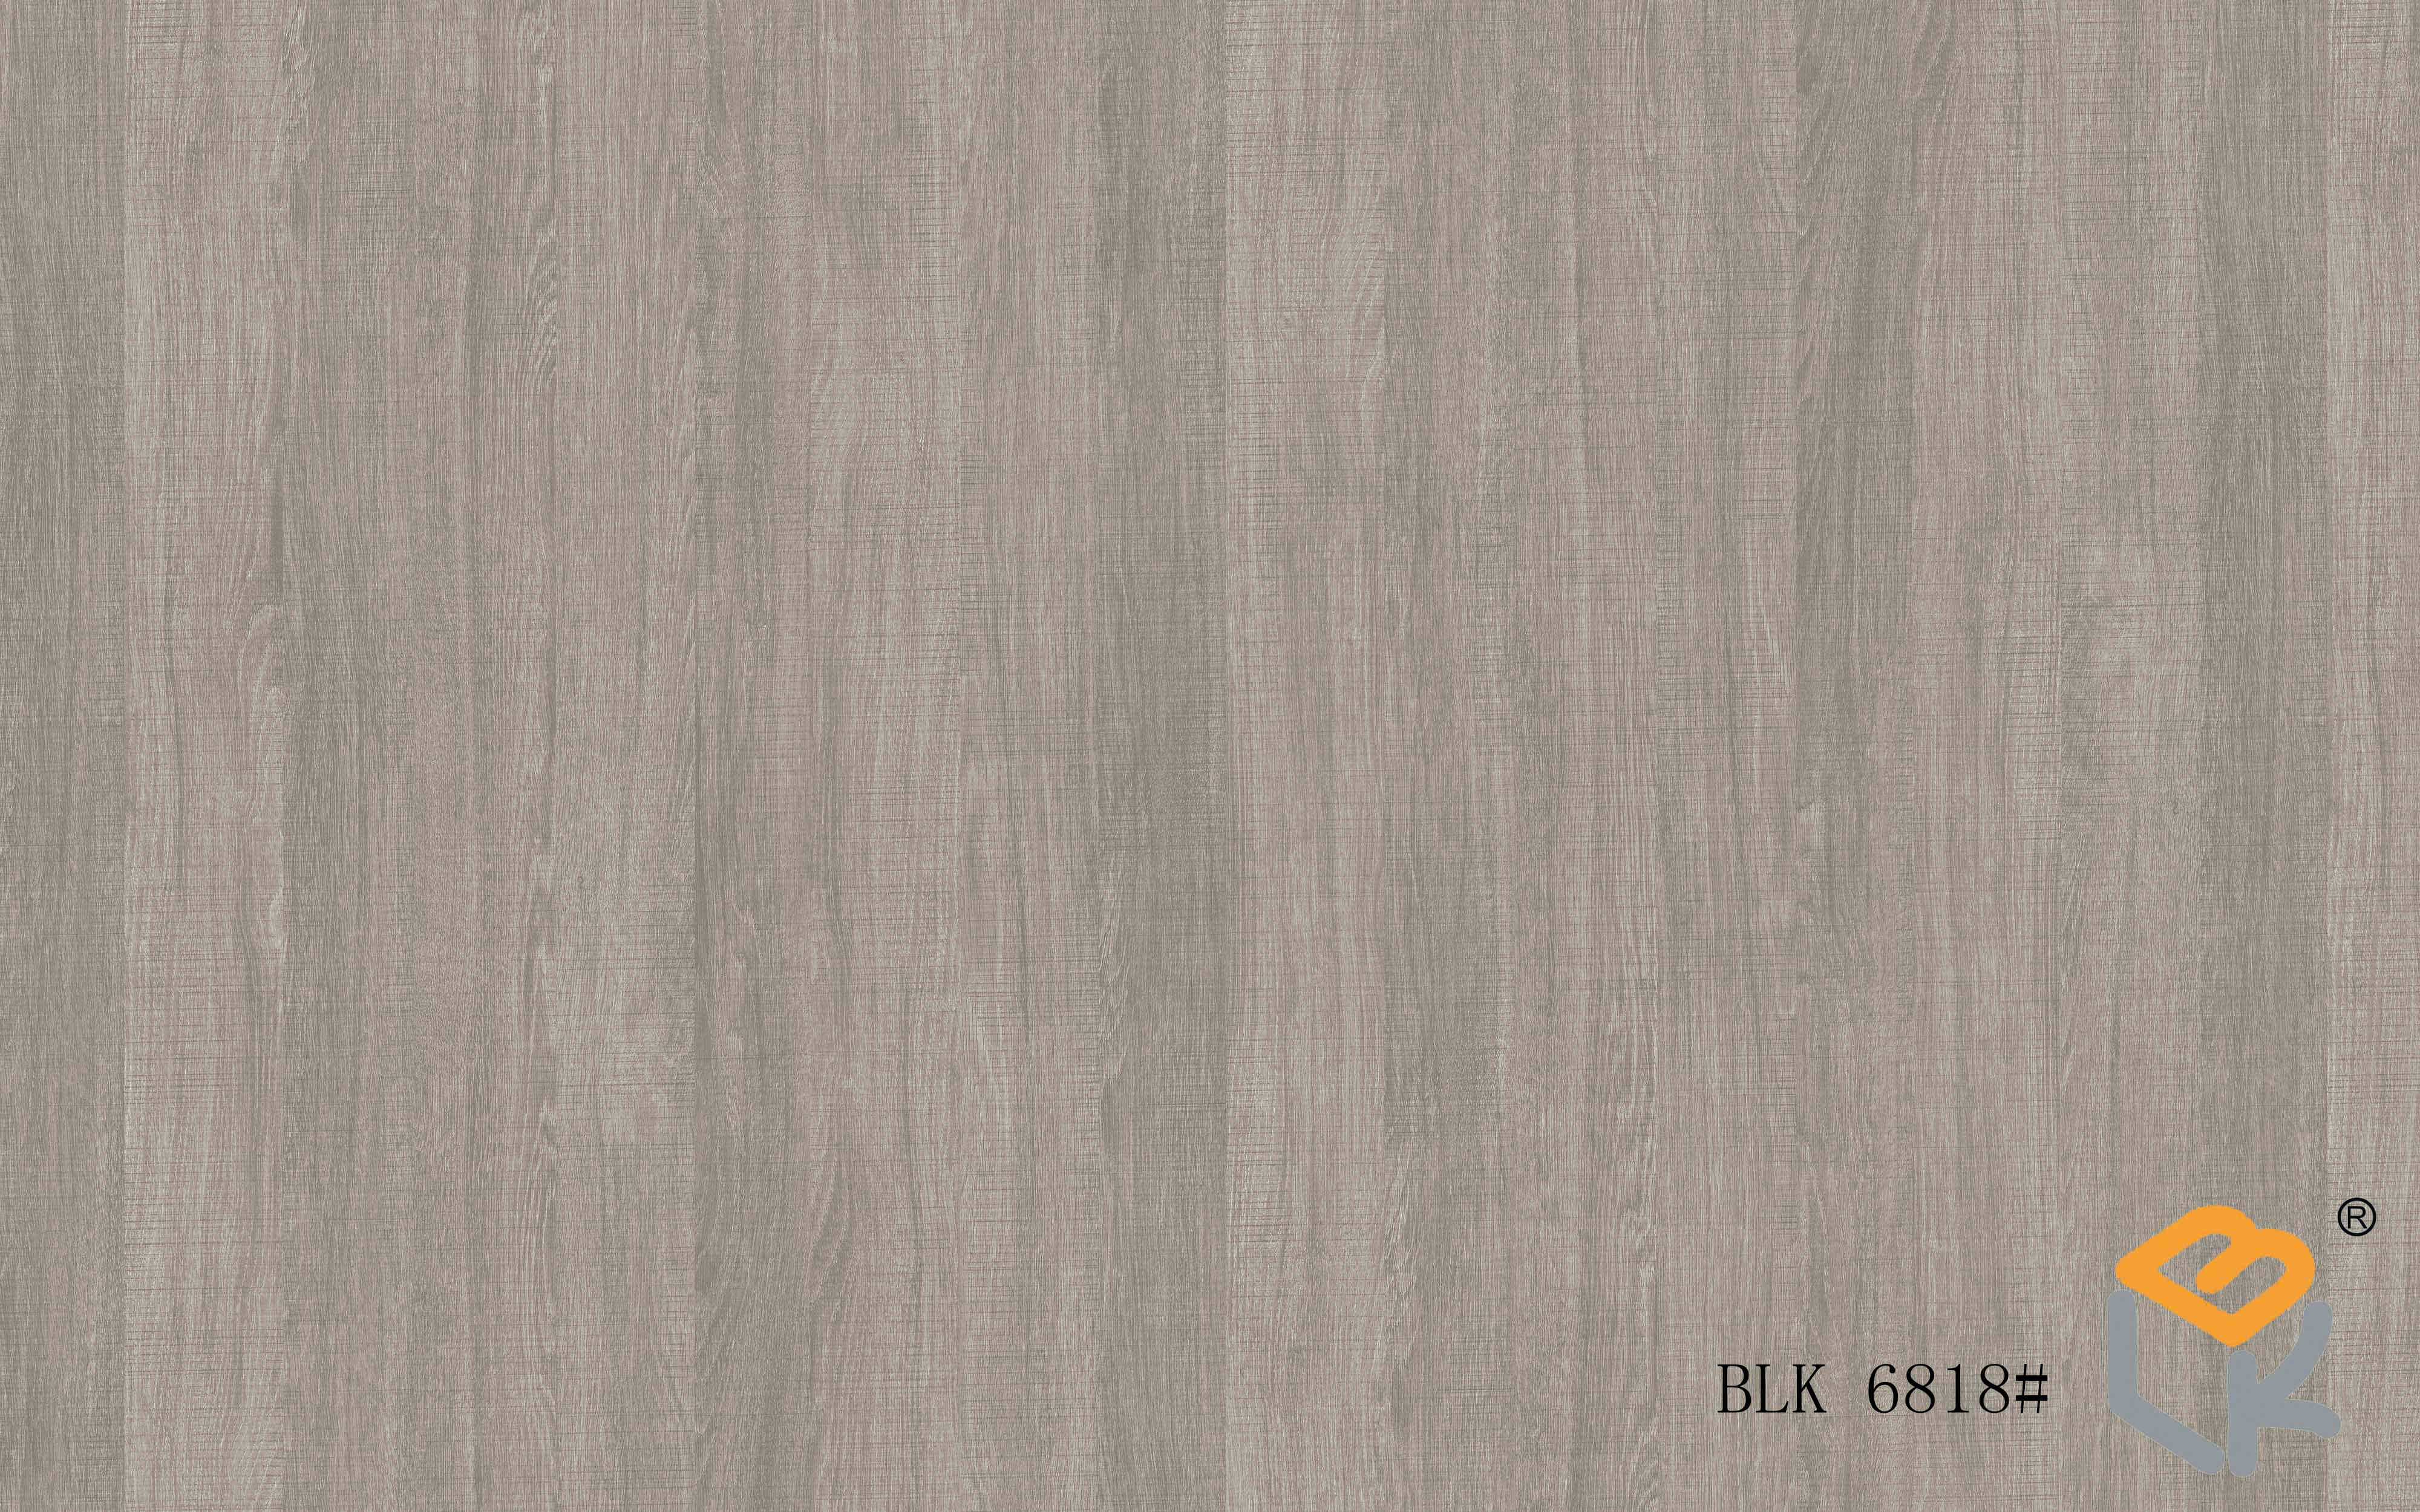 Cross oak woodgrain surface plywood from BLK Decor